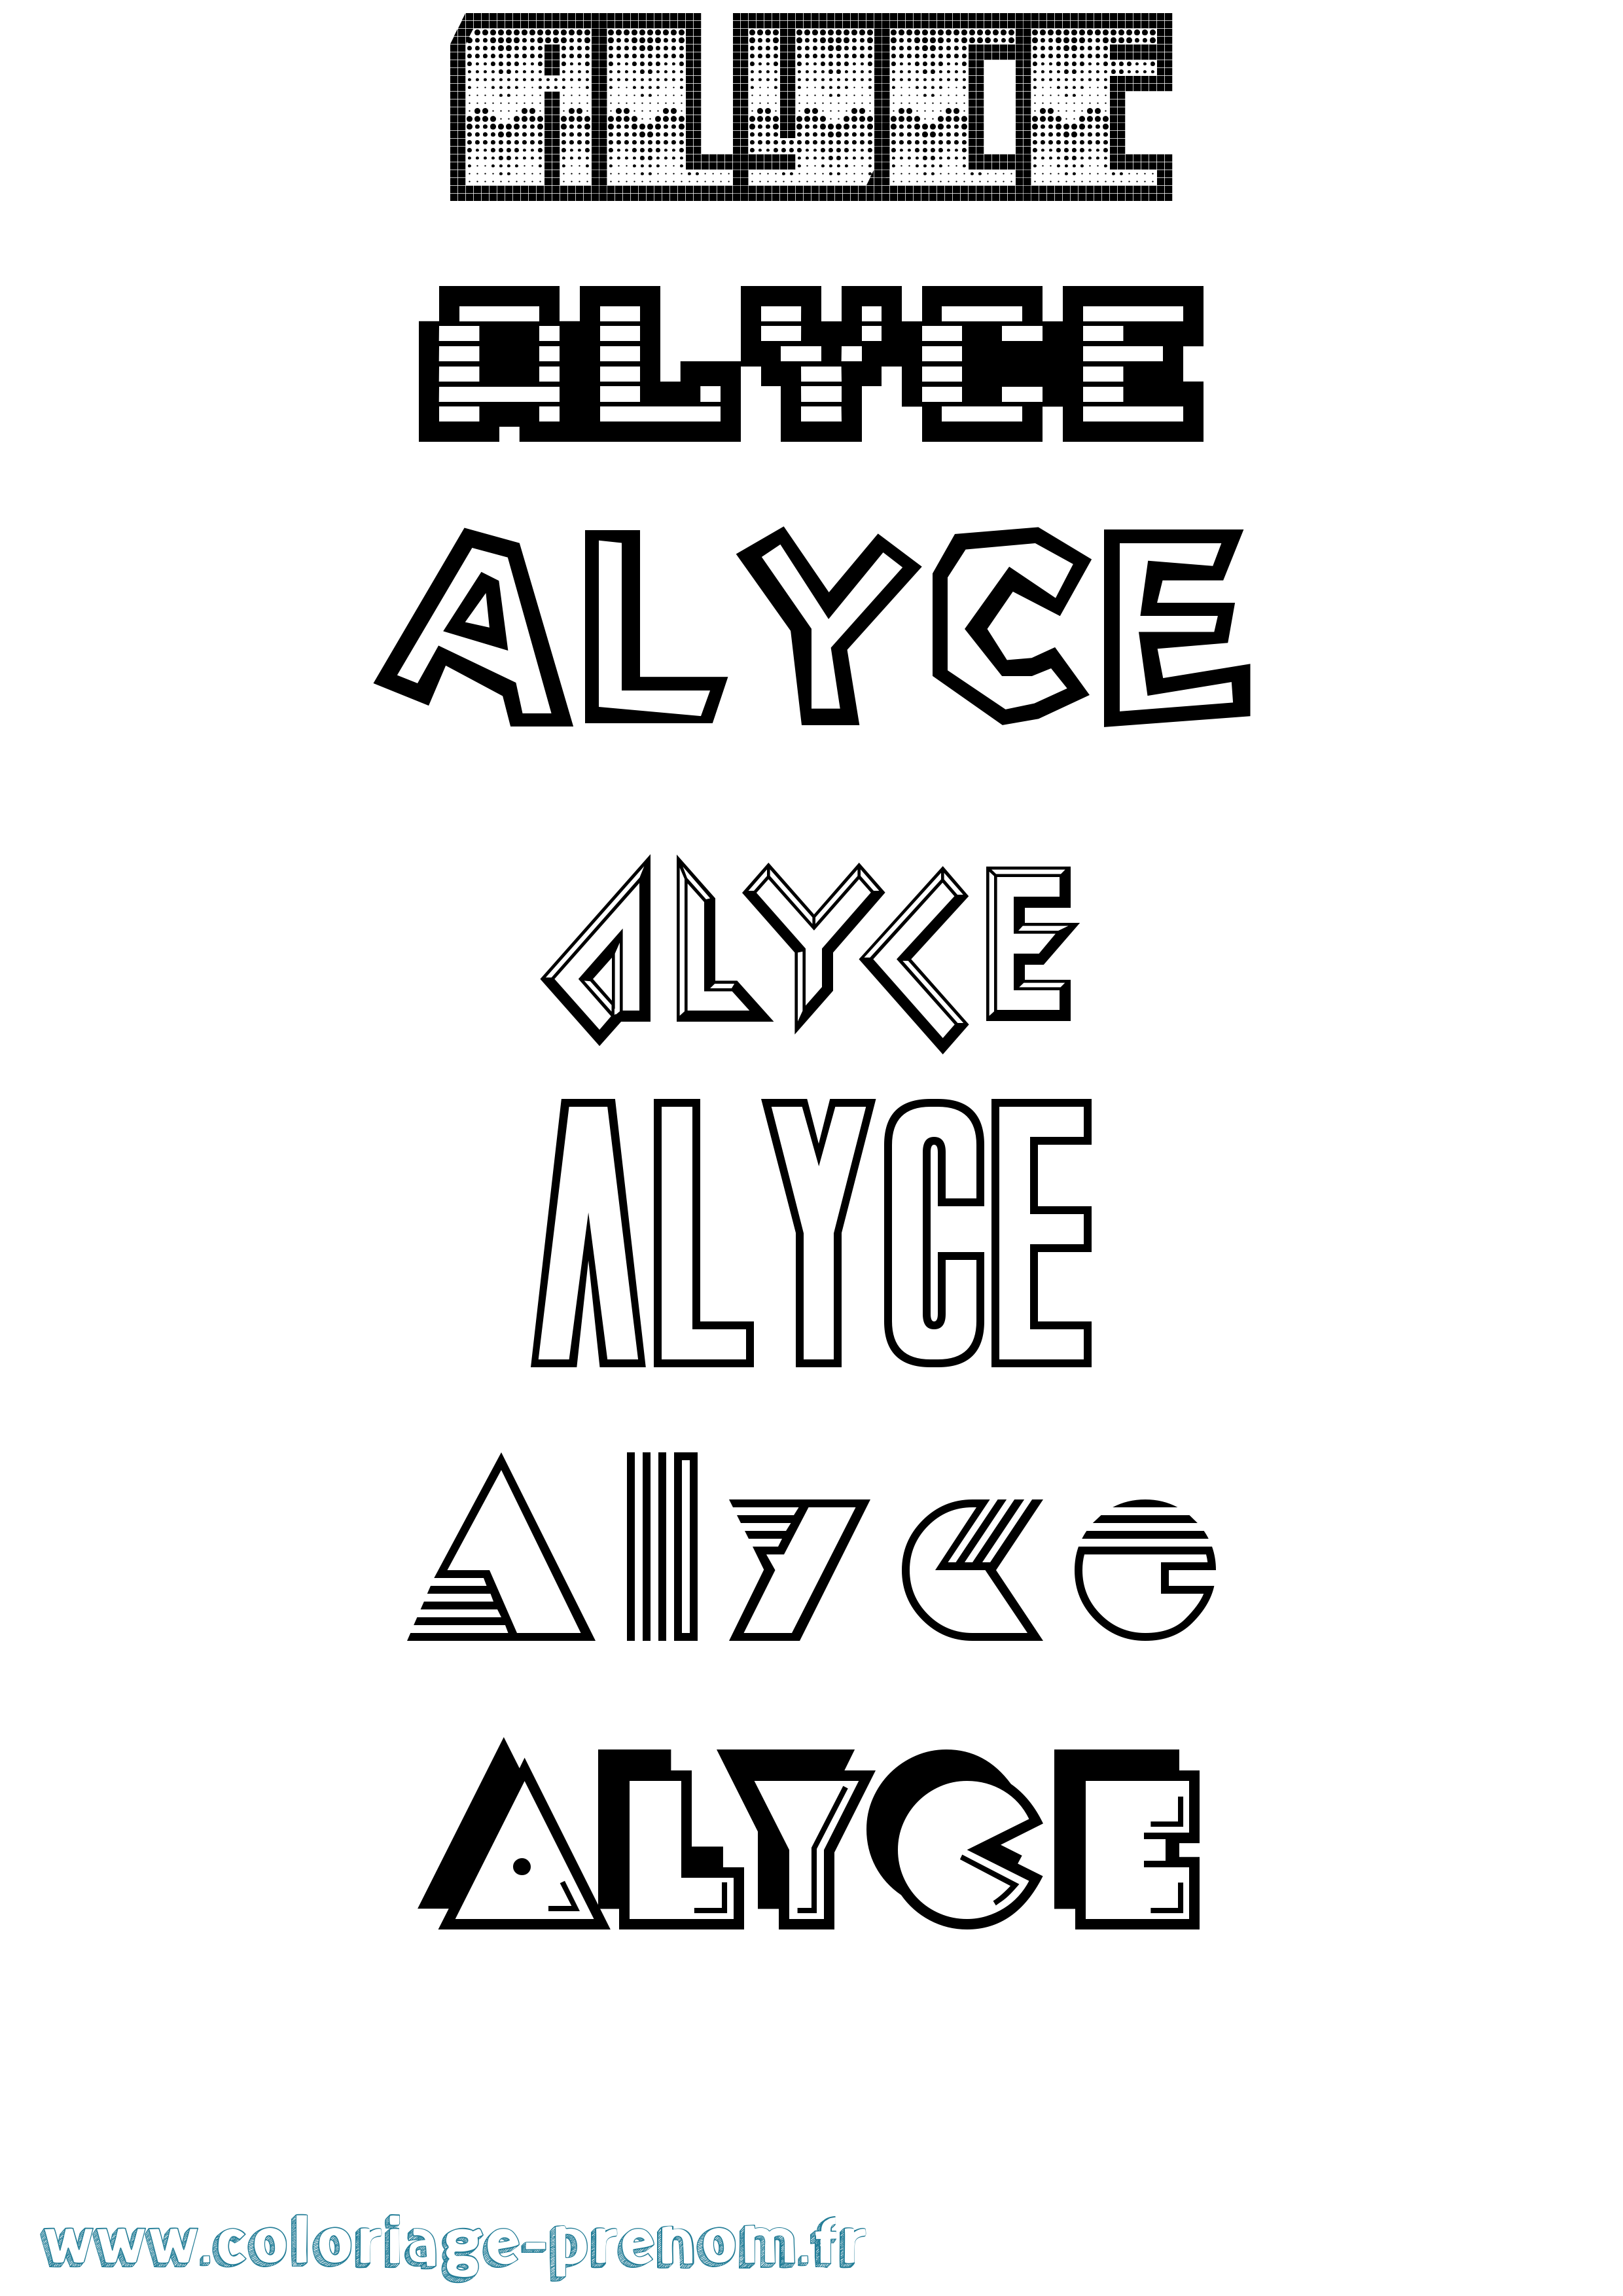 Coloriage prénom Alyce Jeux Vidéos